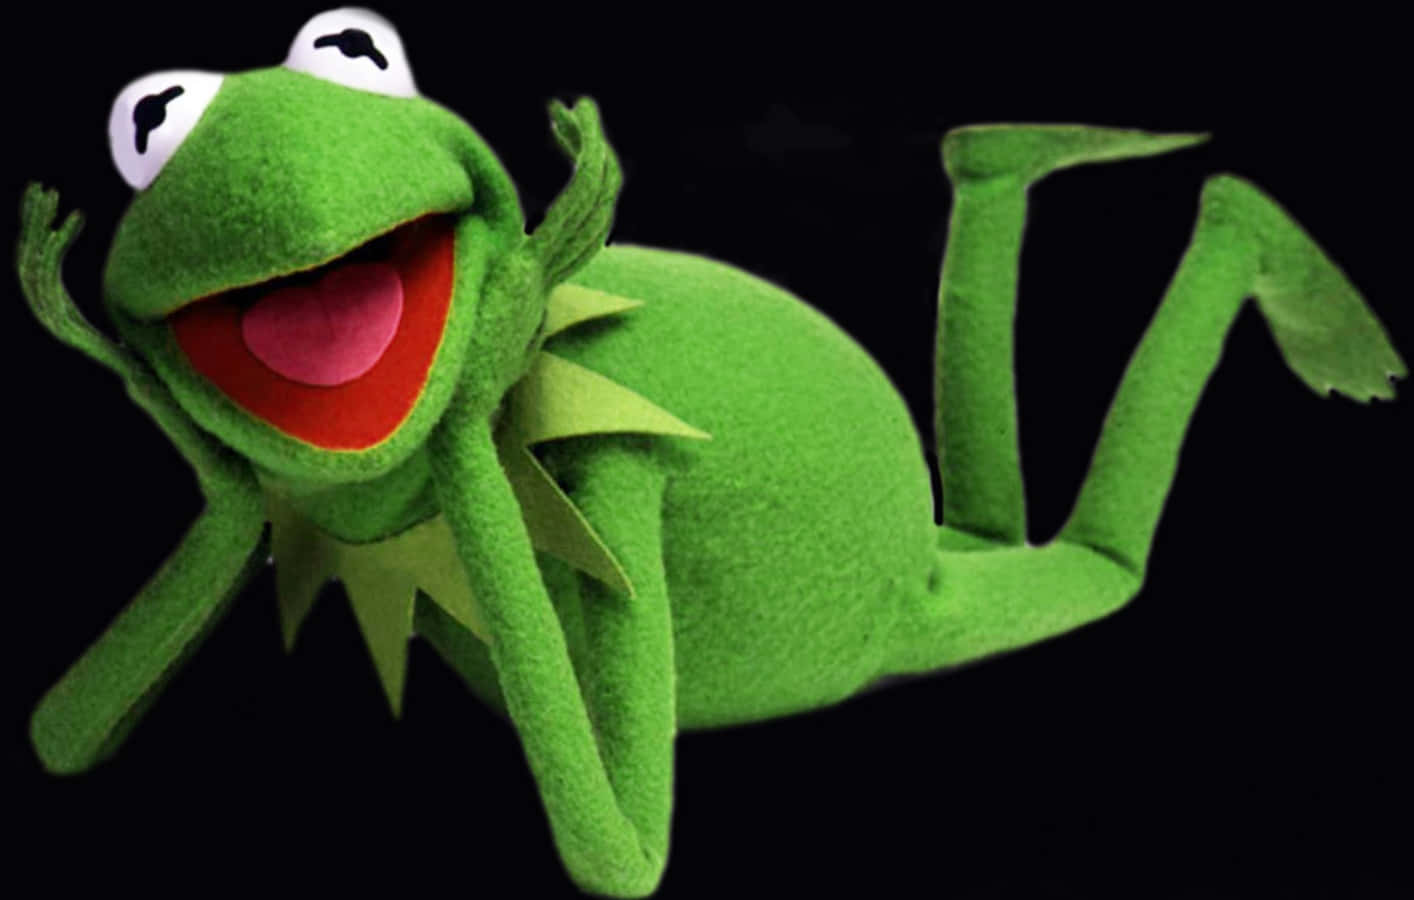 kermit the frog drinking tea in spanish